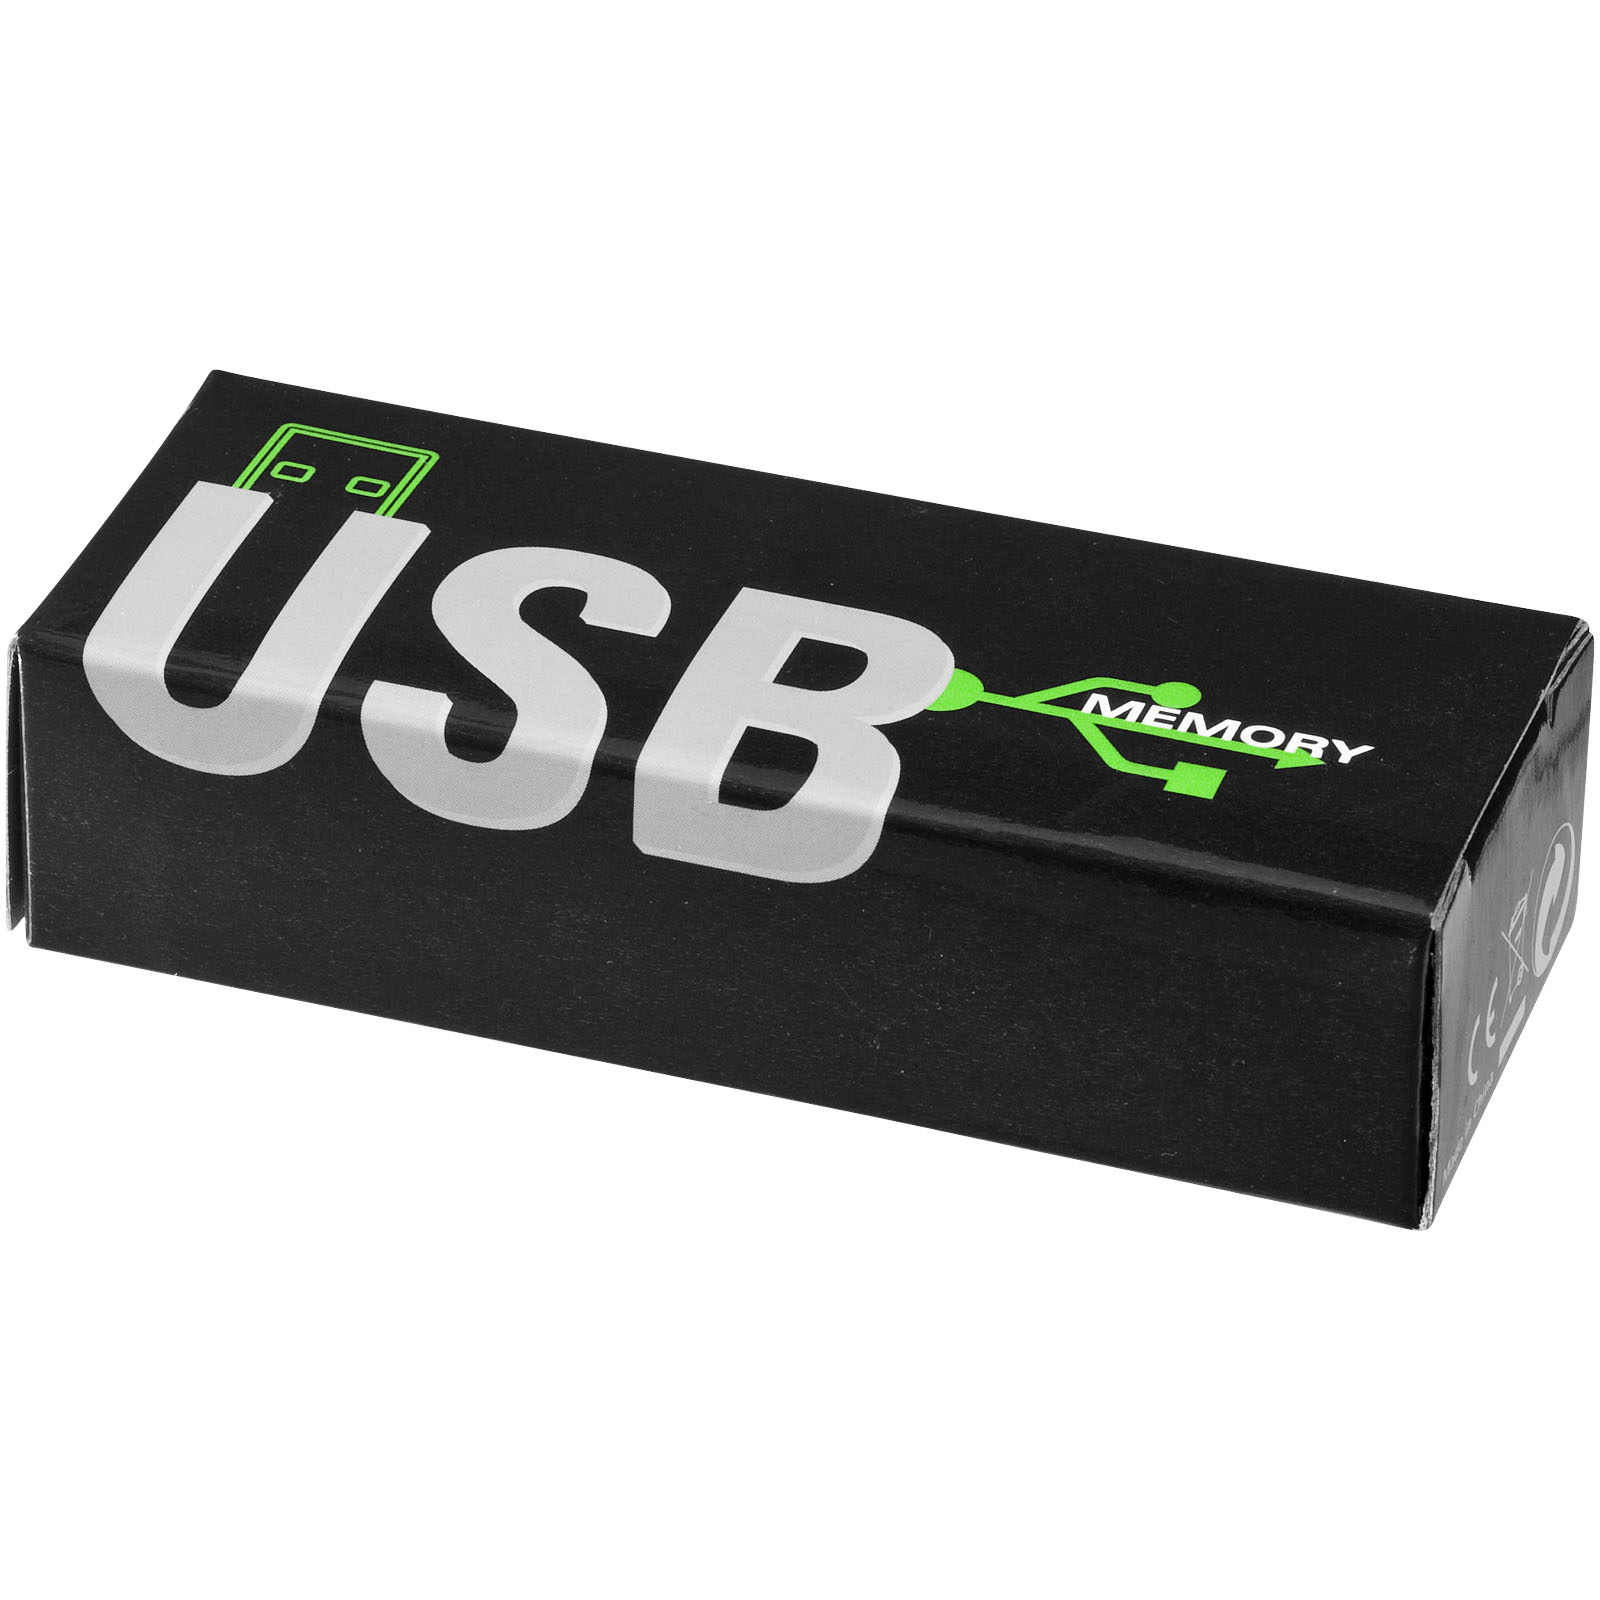 Advertising USB Flash Drives - Even 2GB USB flash drive - 1